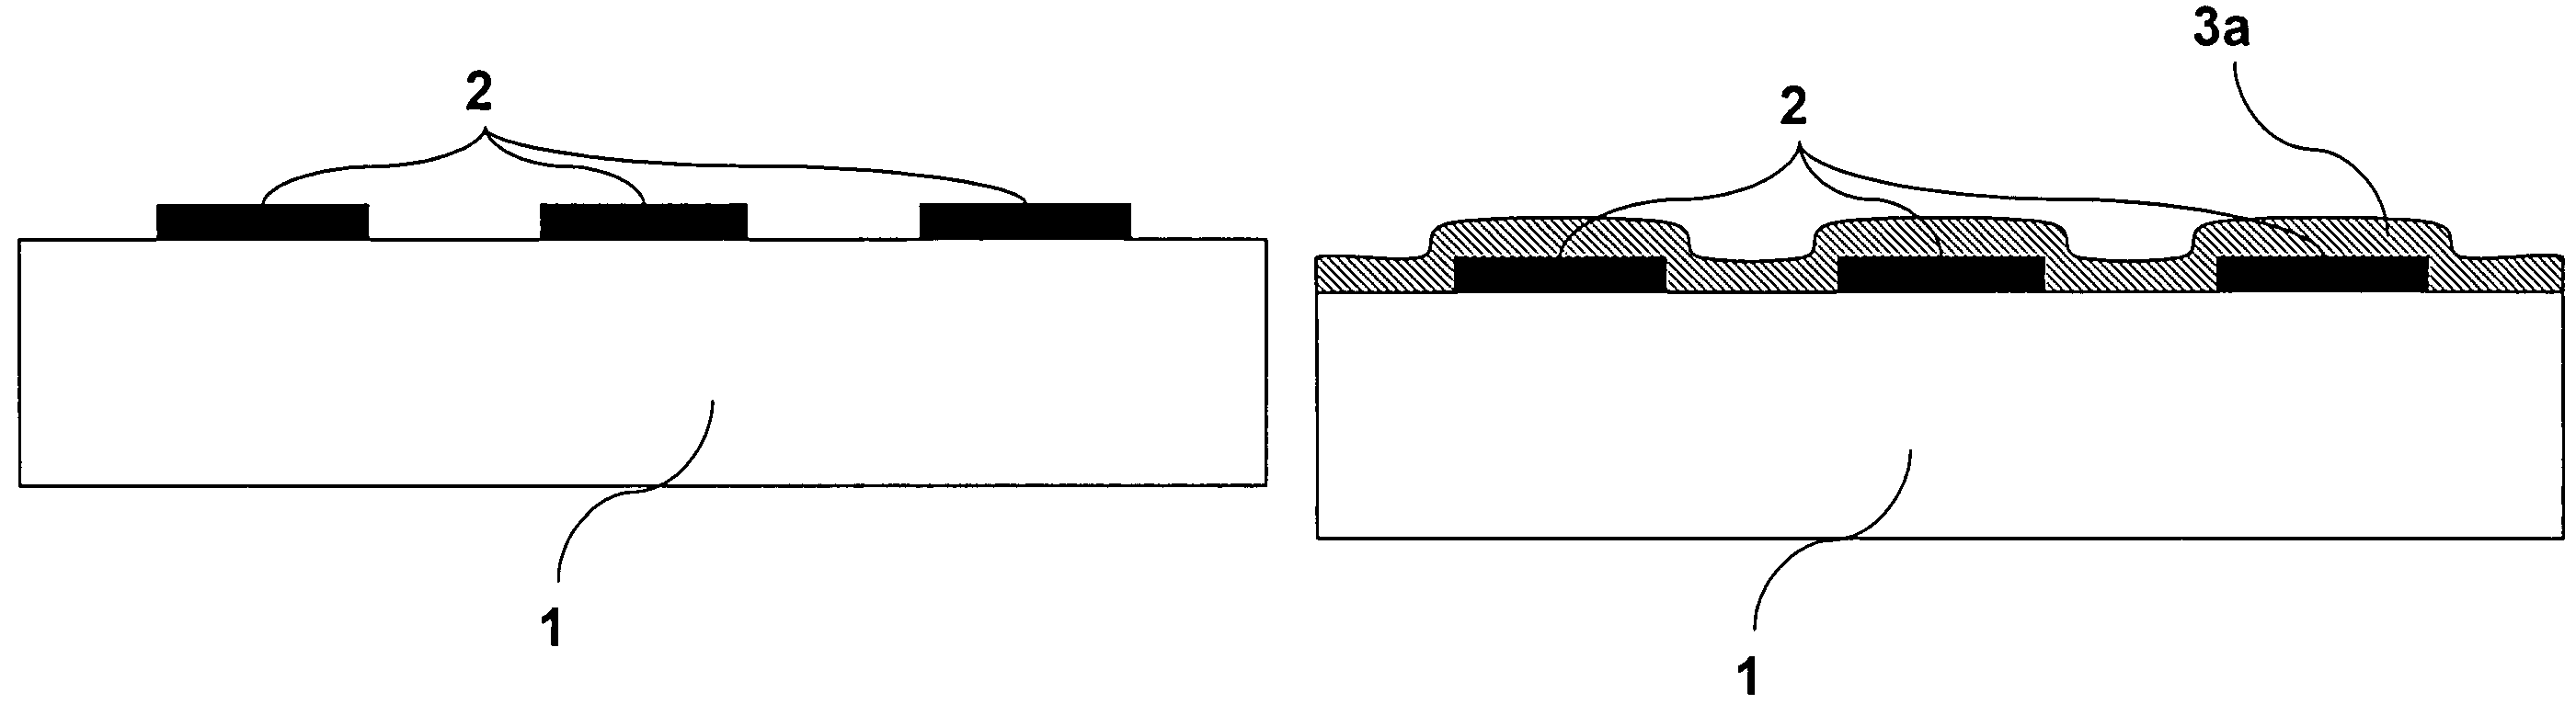 RF resonator system and method for tuning an RF resonator system